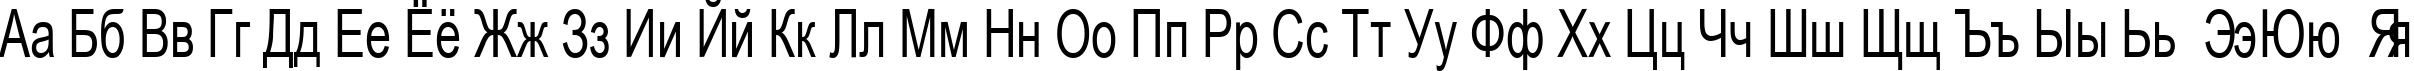 Пример написания русского алфавита шрифтом Arial70n